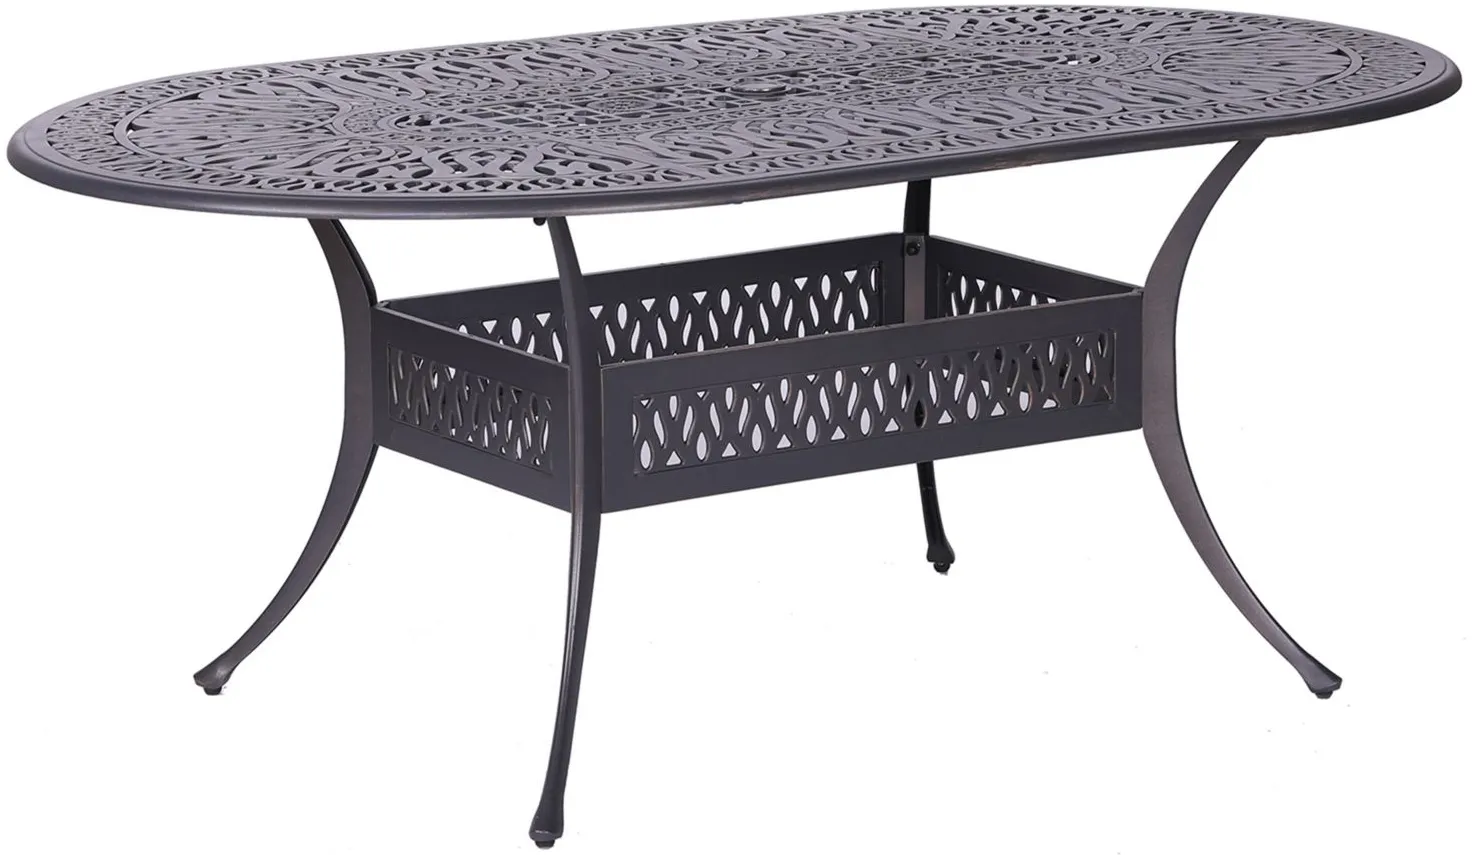 Geneva Outdoor Oval Dining Table in Dark Slate Gray by Bellanest